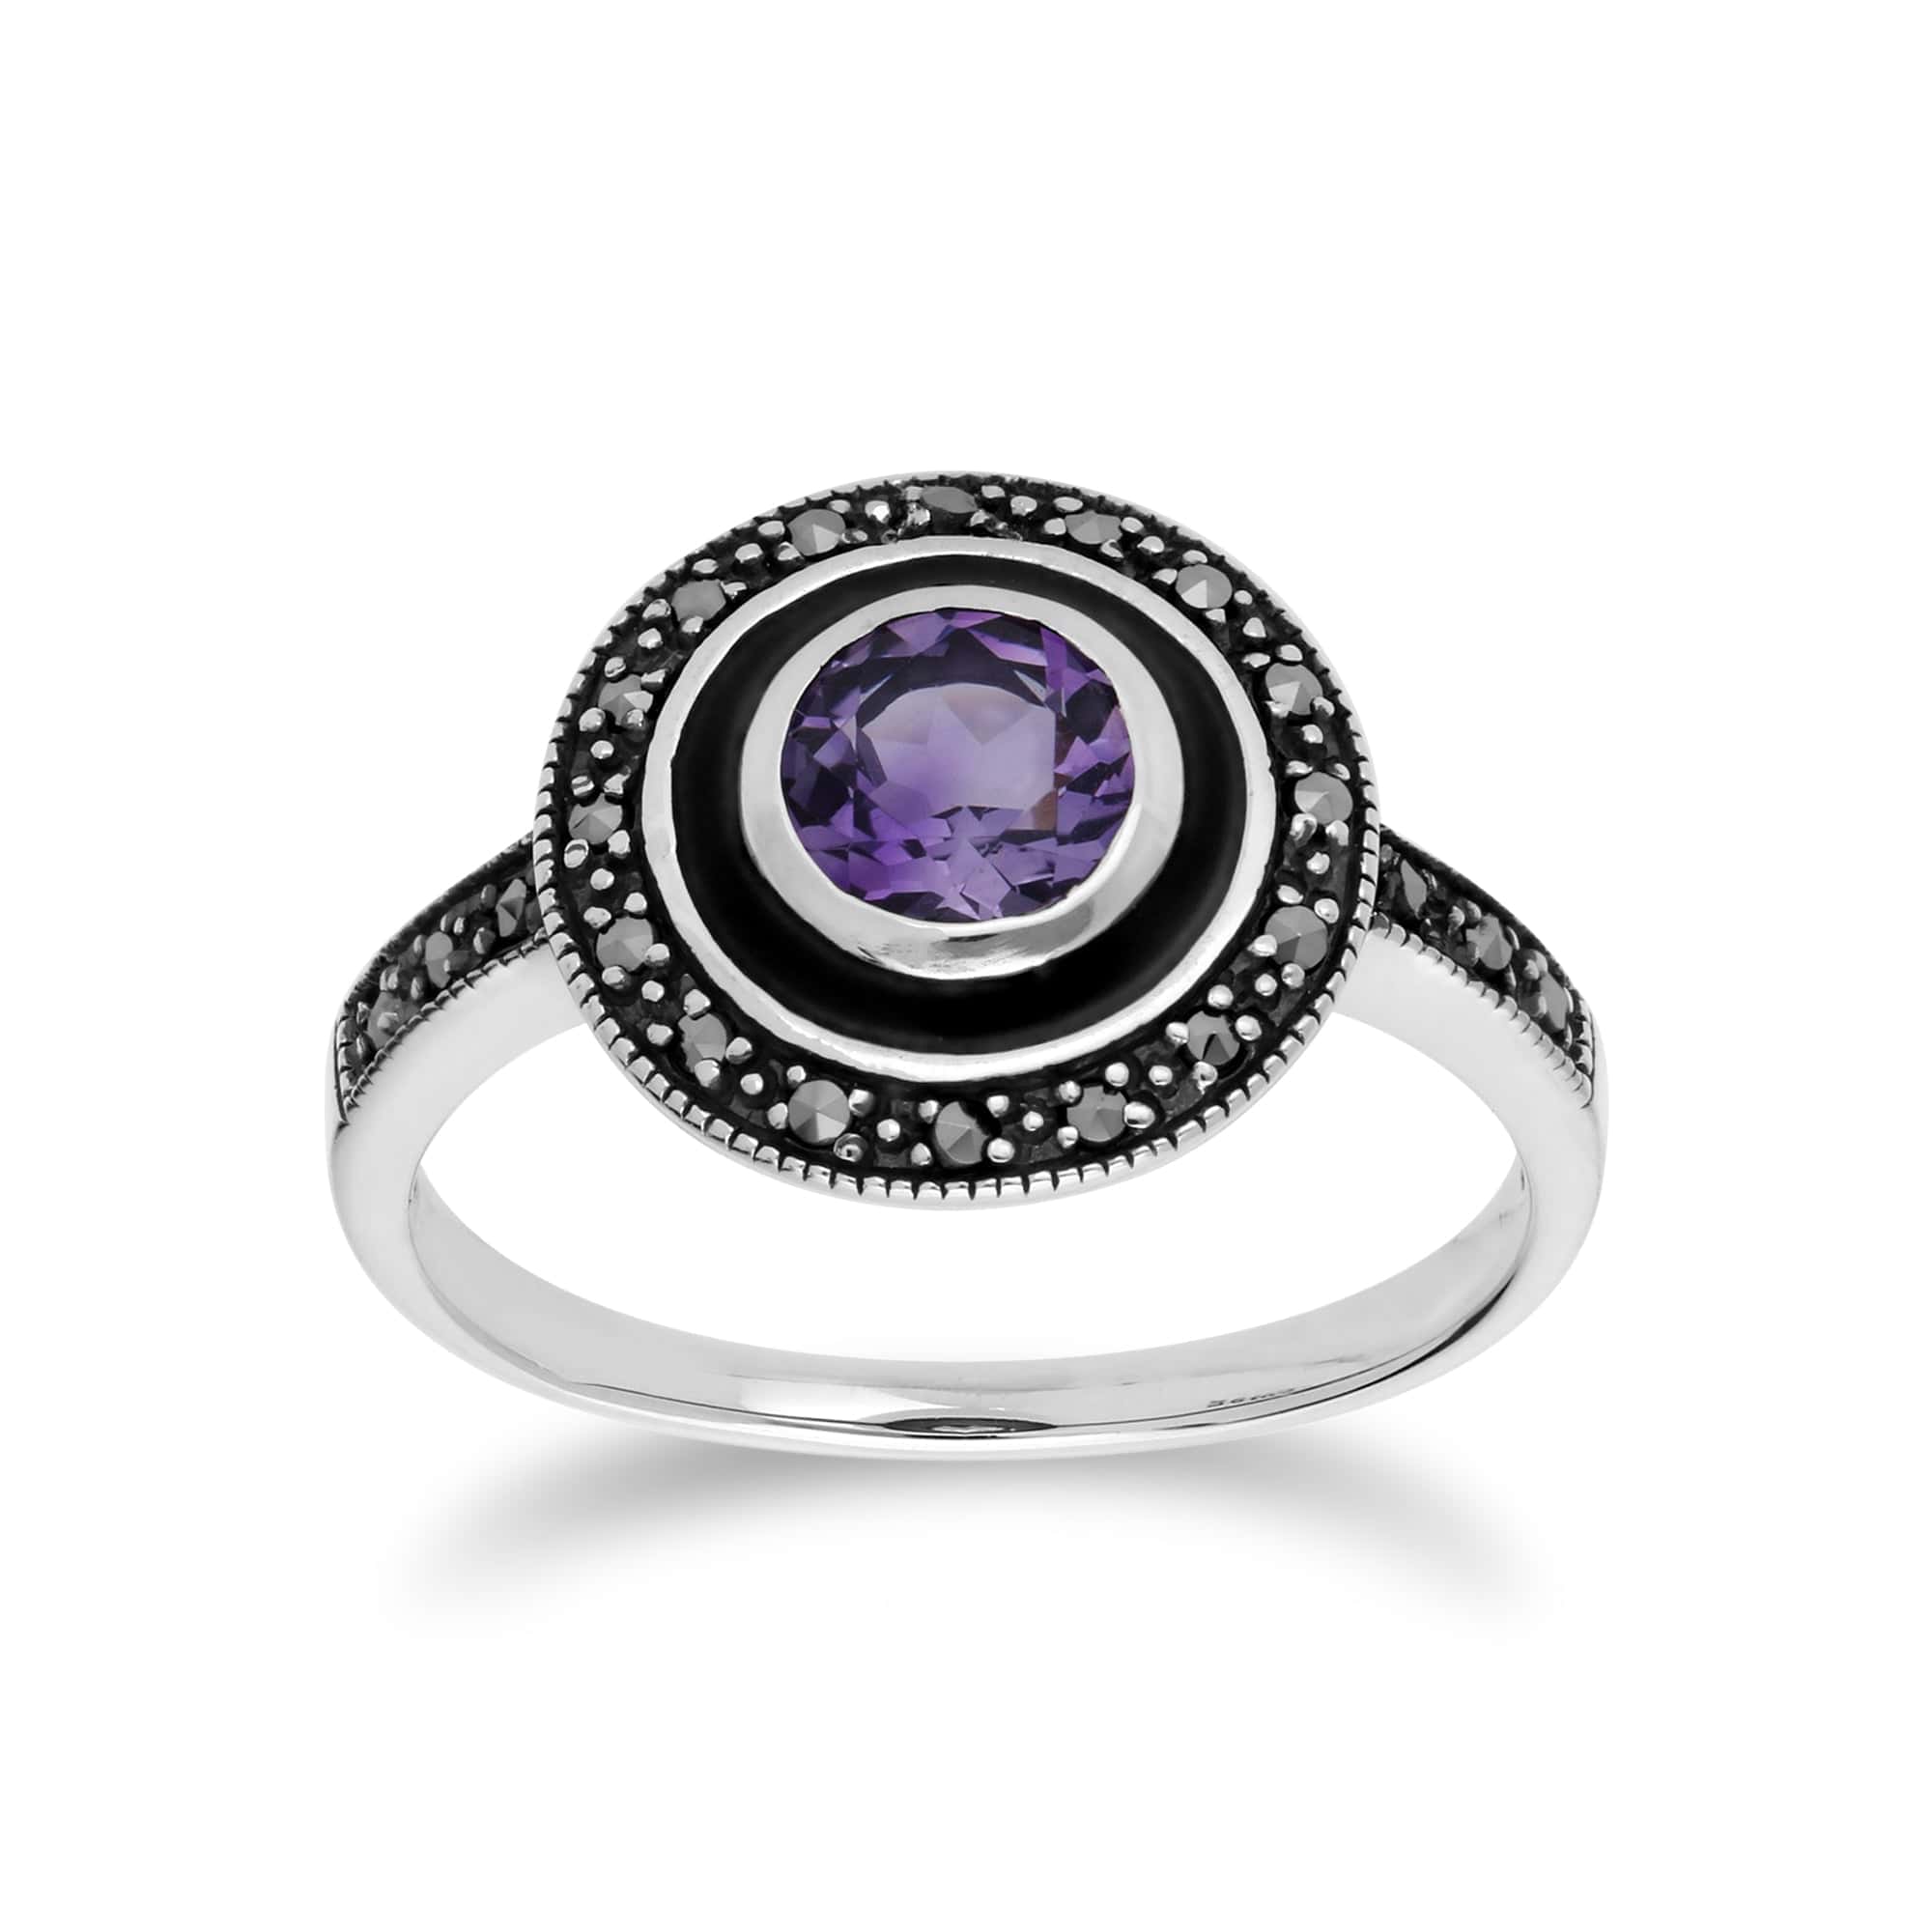 Art Deco Style Round Amethyst & Black Enamel Halo Ring in 925 Sterling Silver - Gemondo